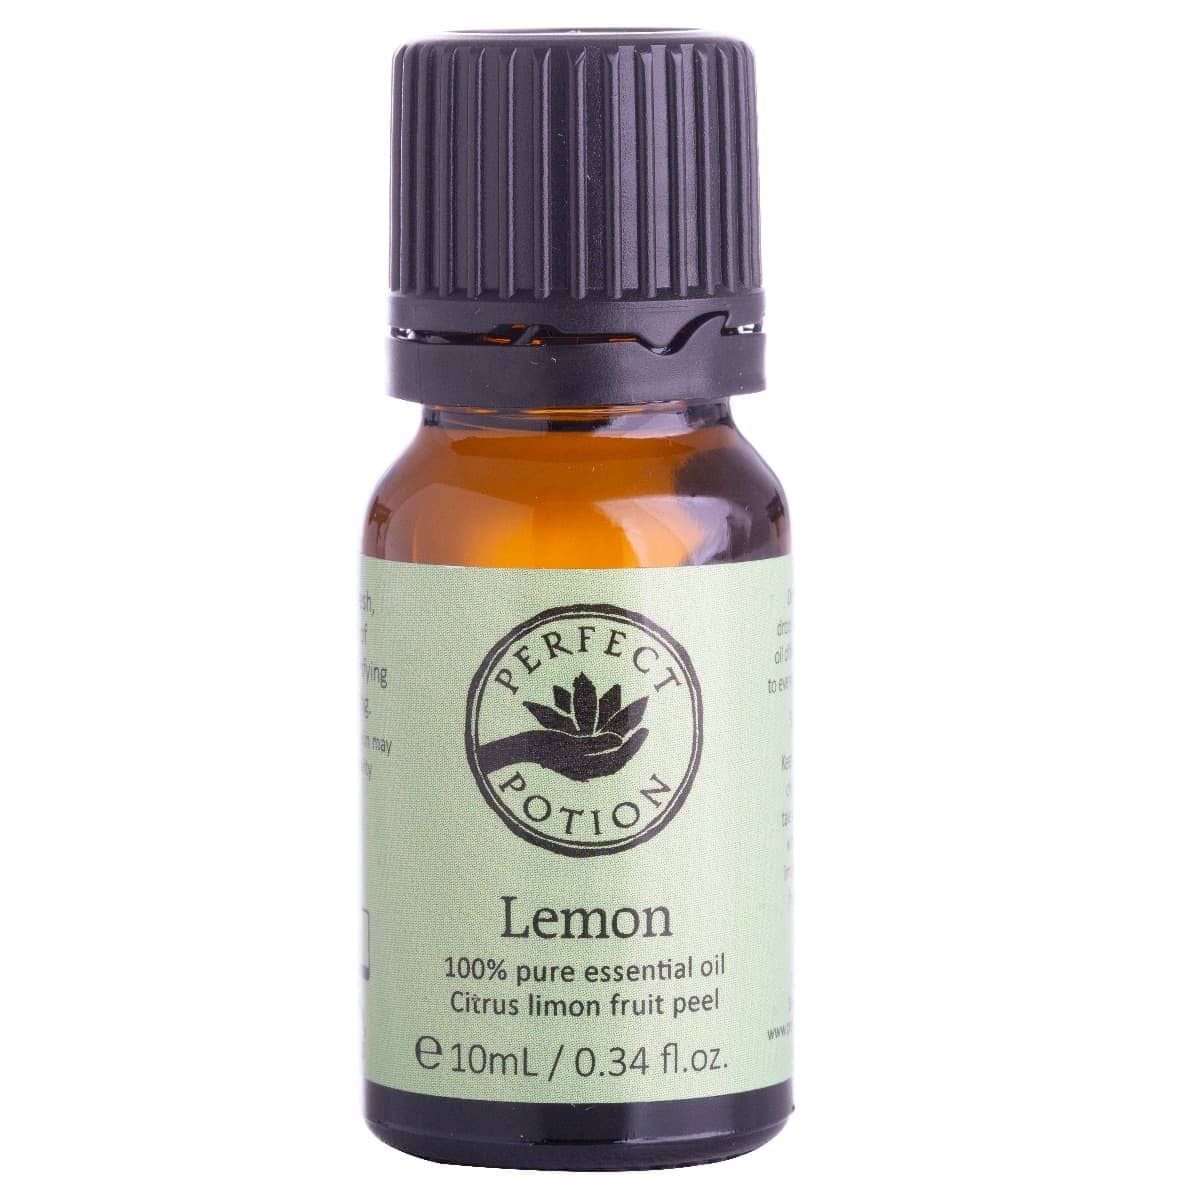 Lemon Citrus limon 10ml - Organic